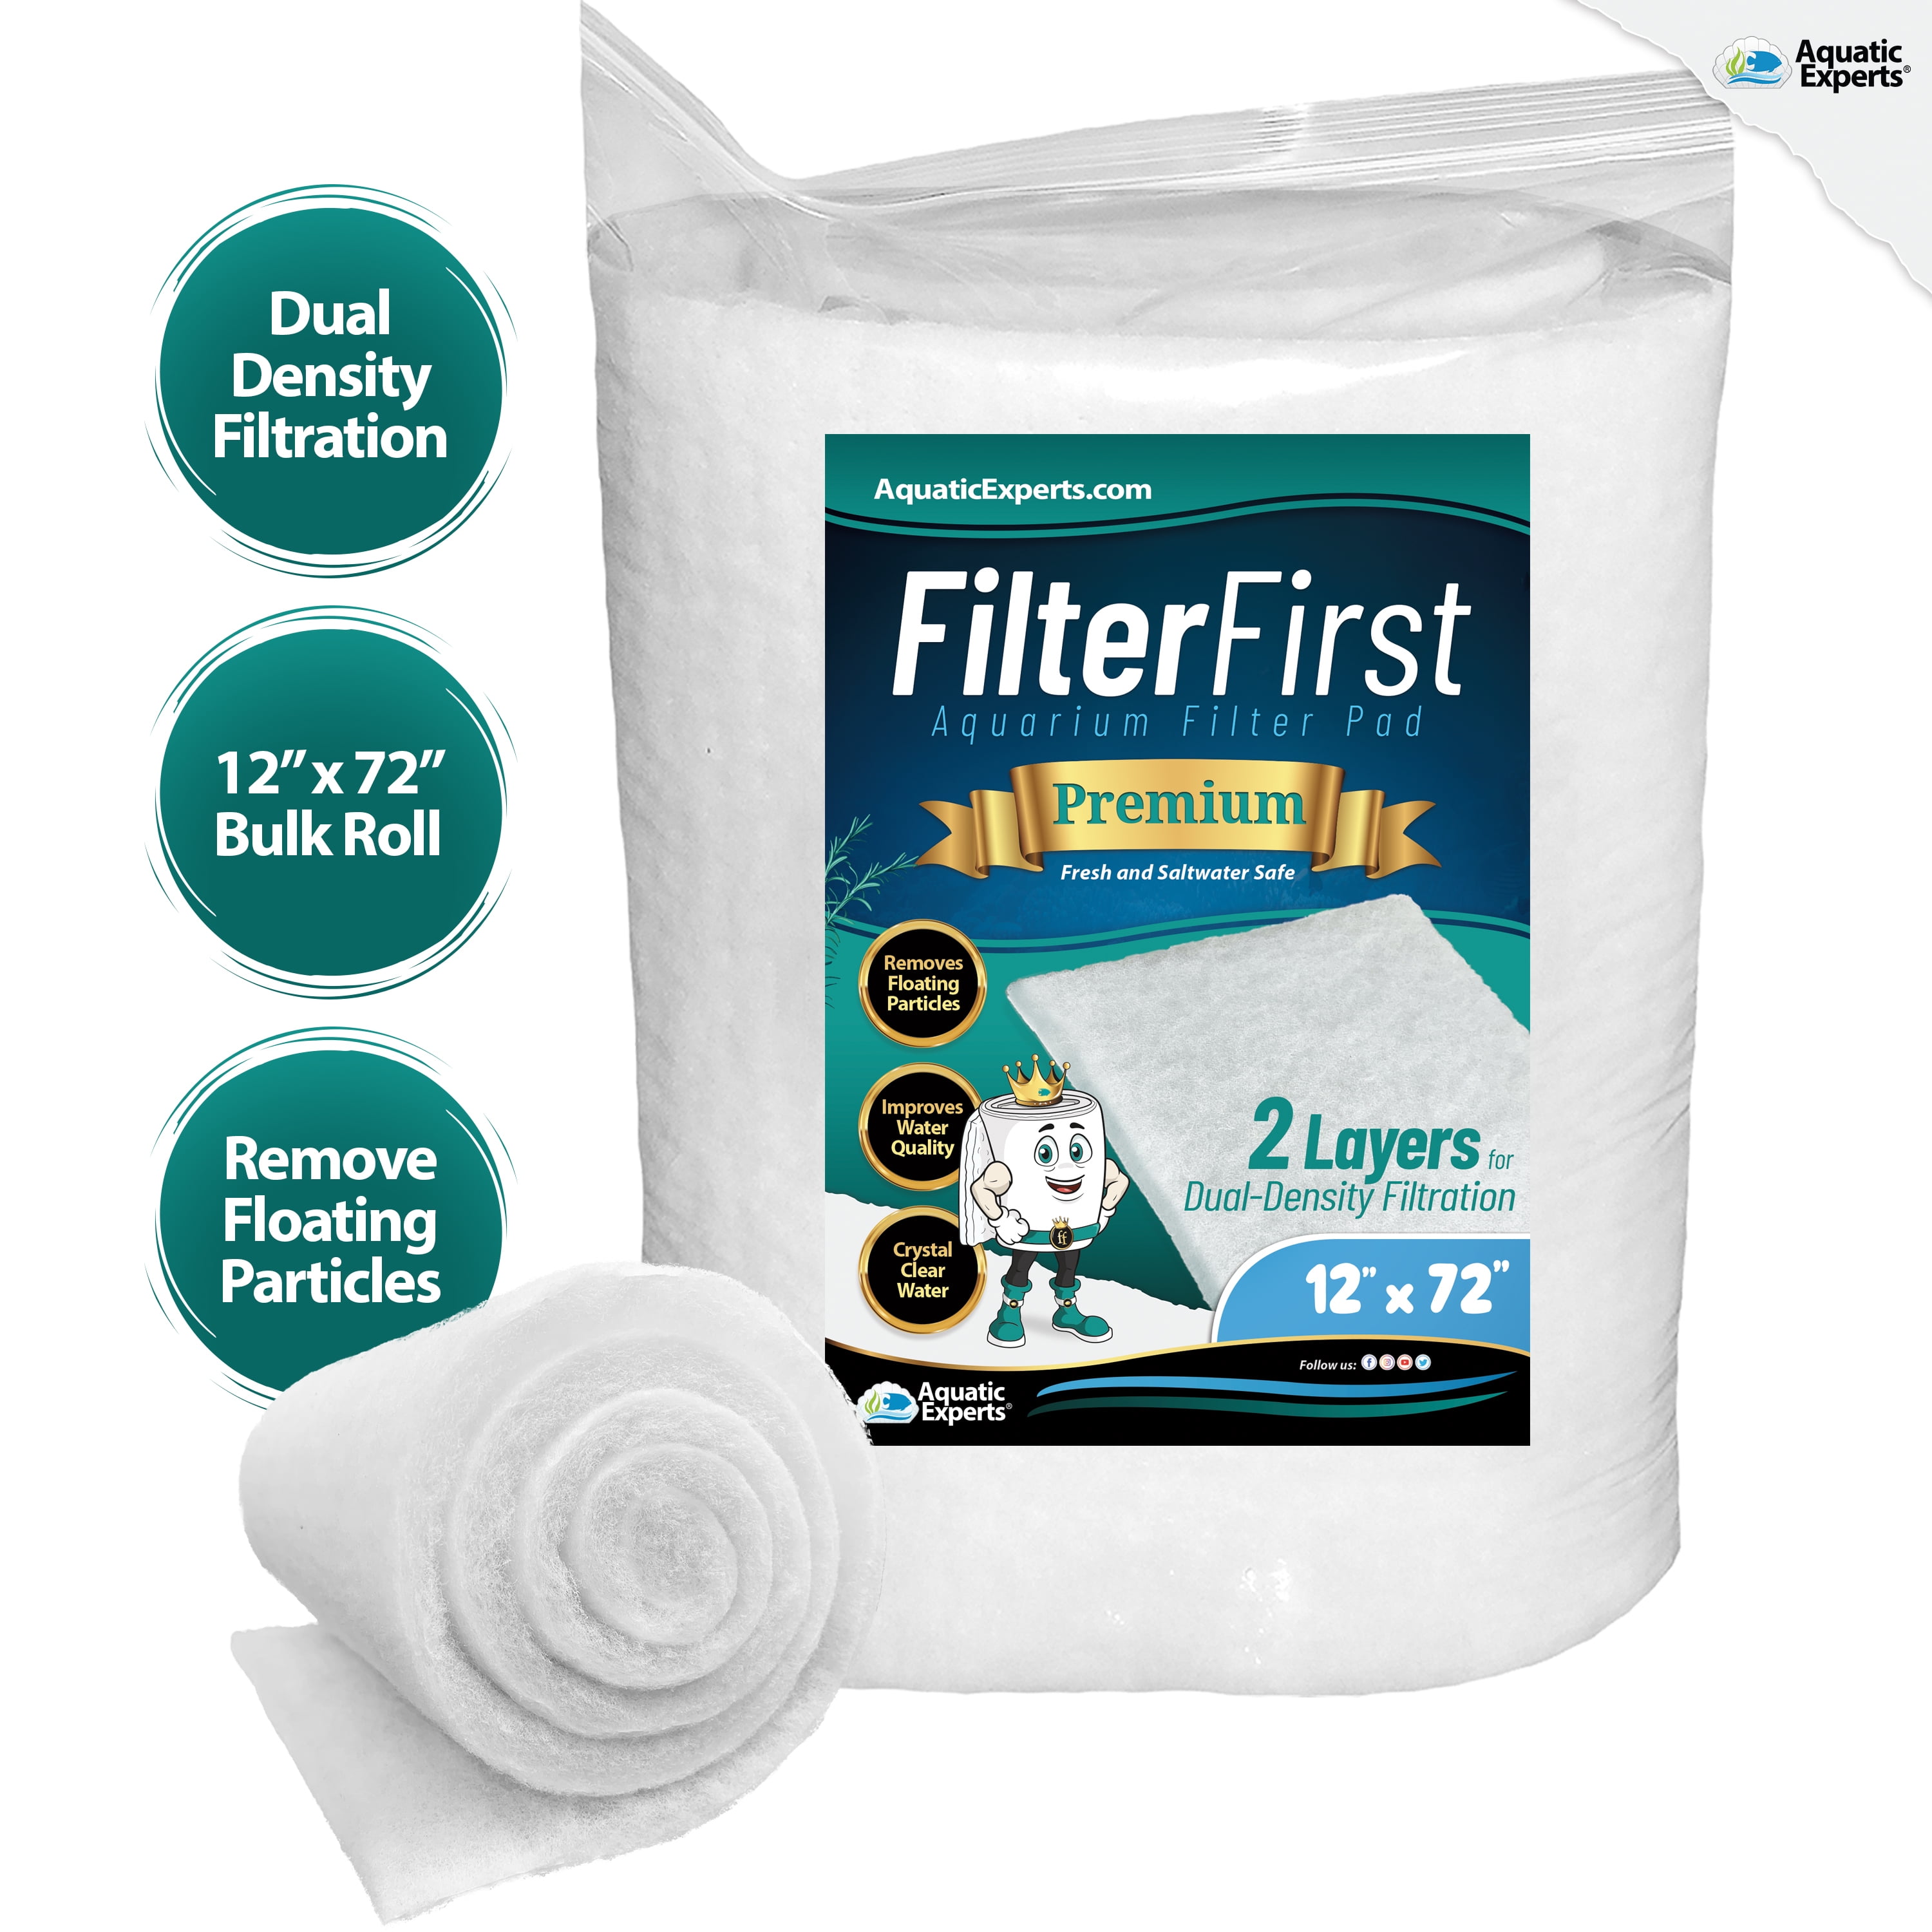  Top Fin CN-S Corner Filter Cartridges 3 Pack (Two Set) : Pet  Supplies